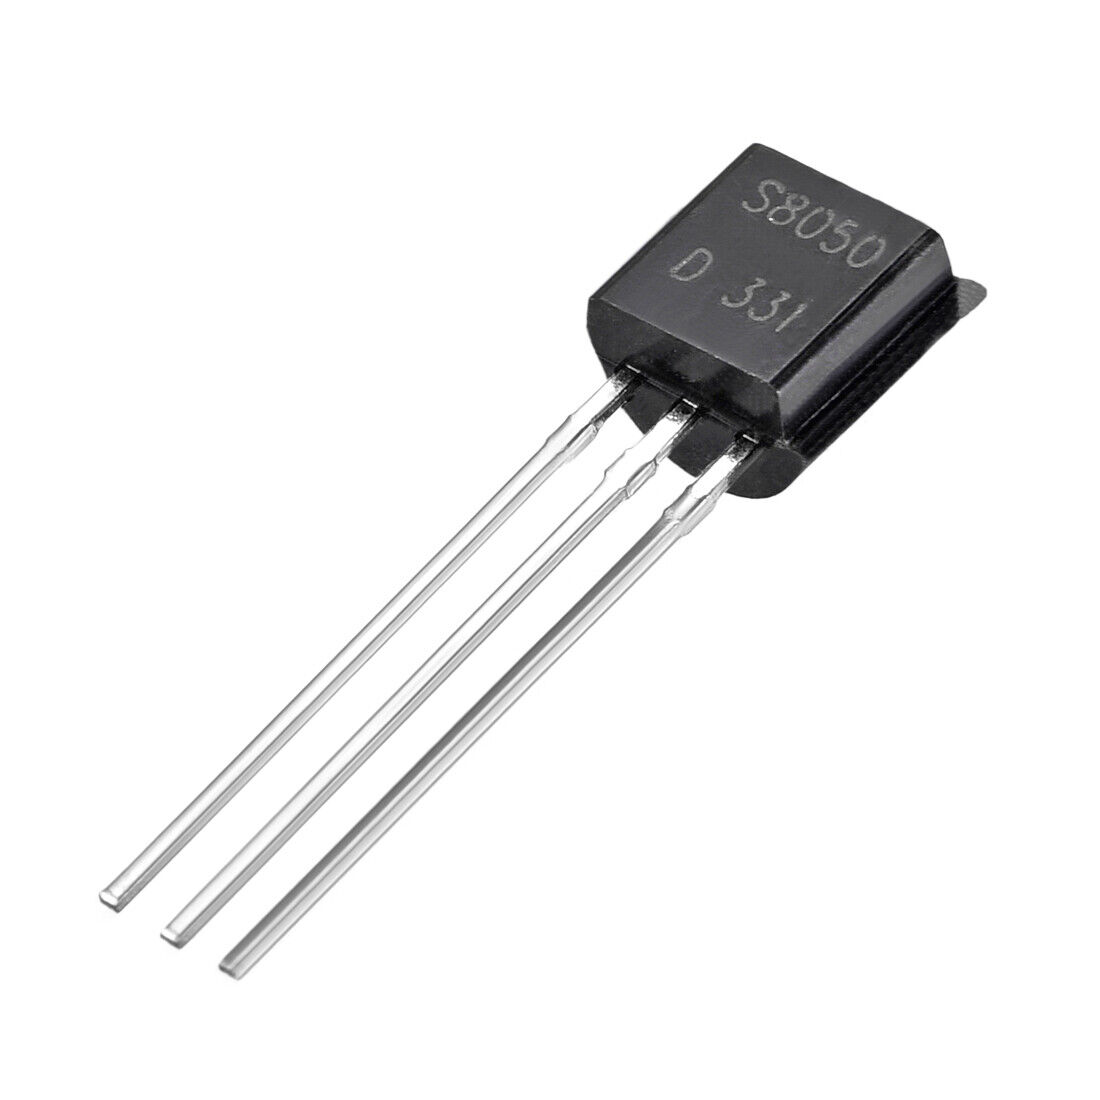 S8050 Plastic-Encapsulate Power Transistor NPN TO-92 20pcs